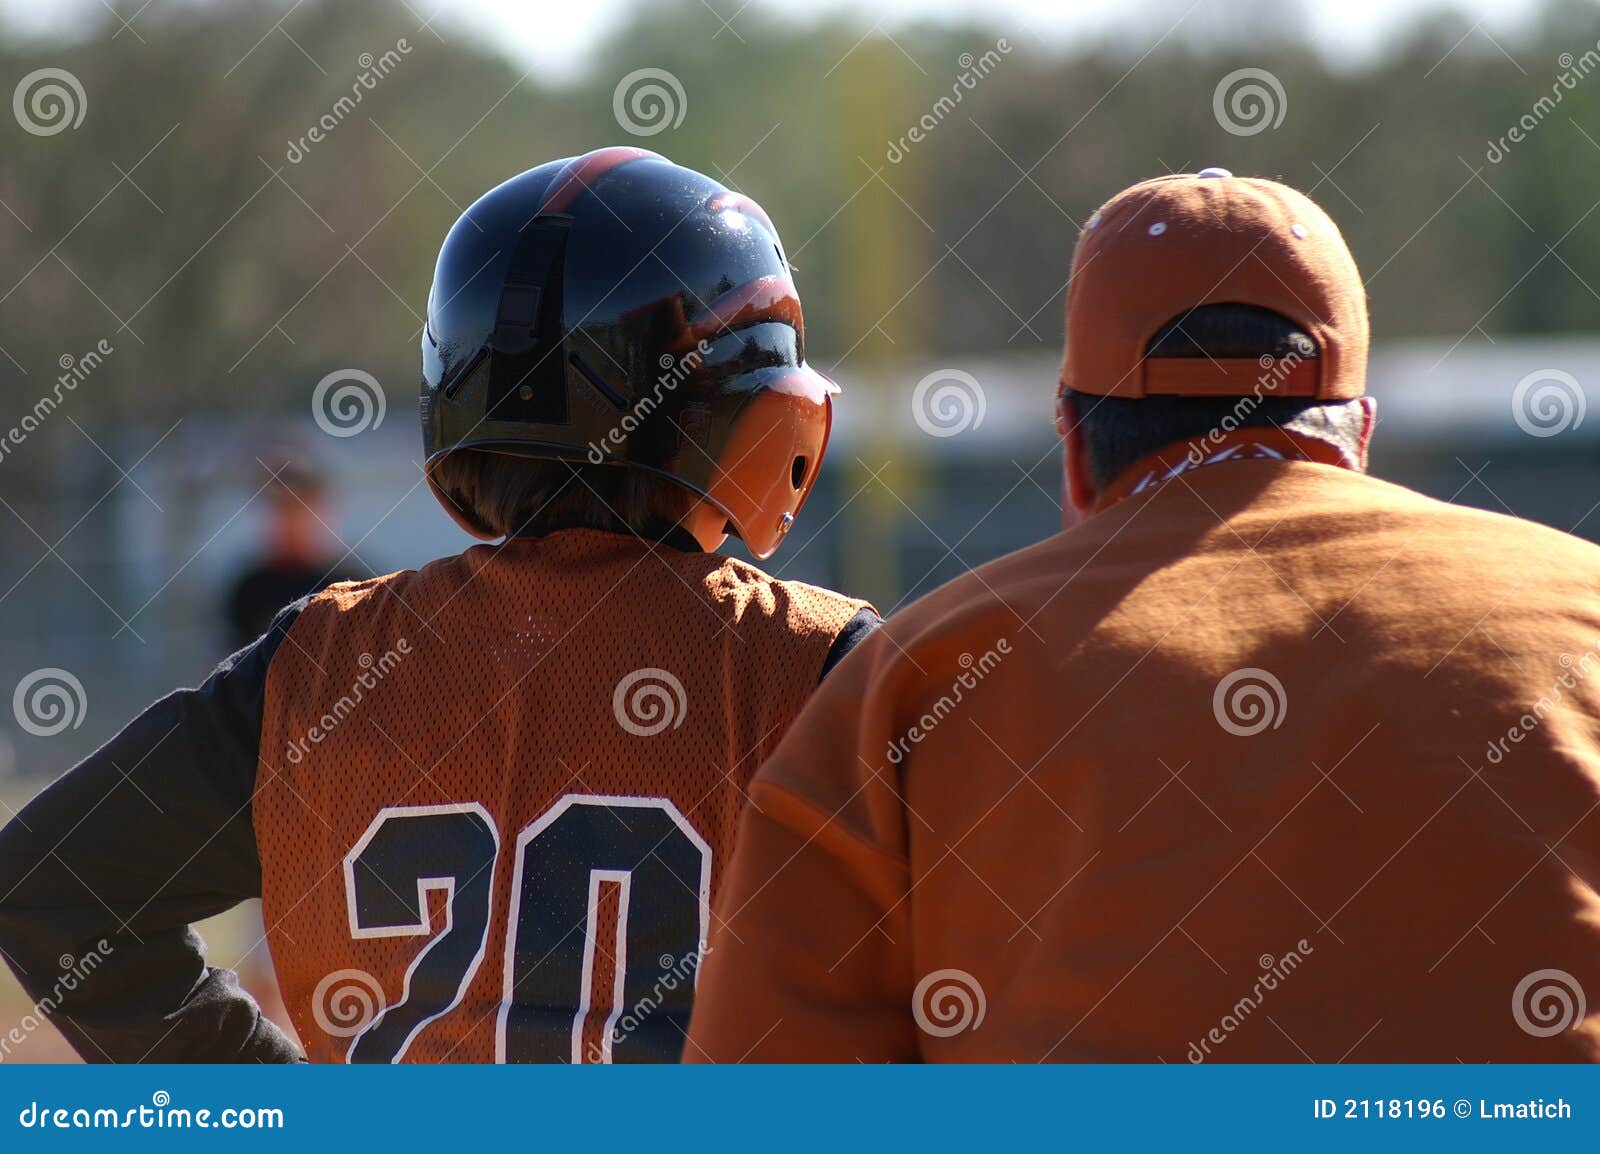 baseball player and base coach